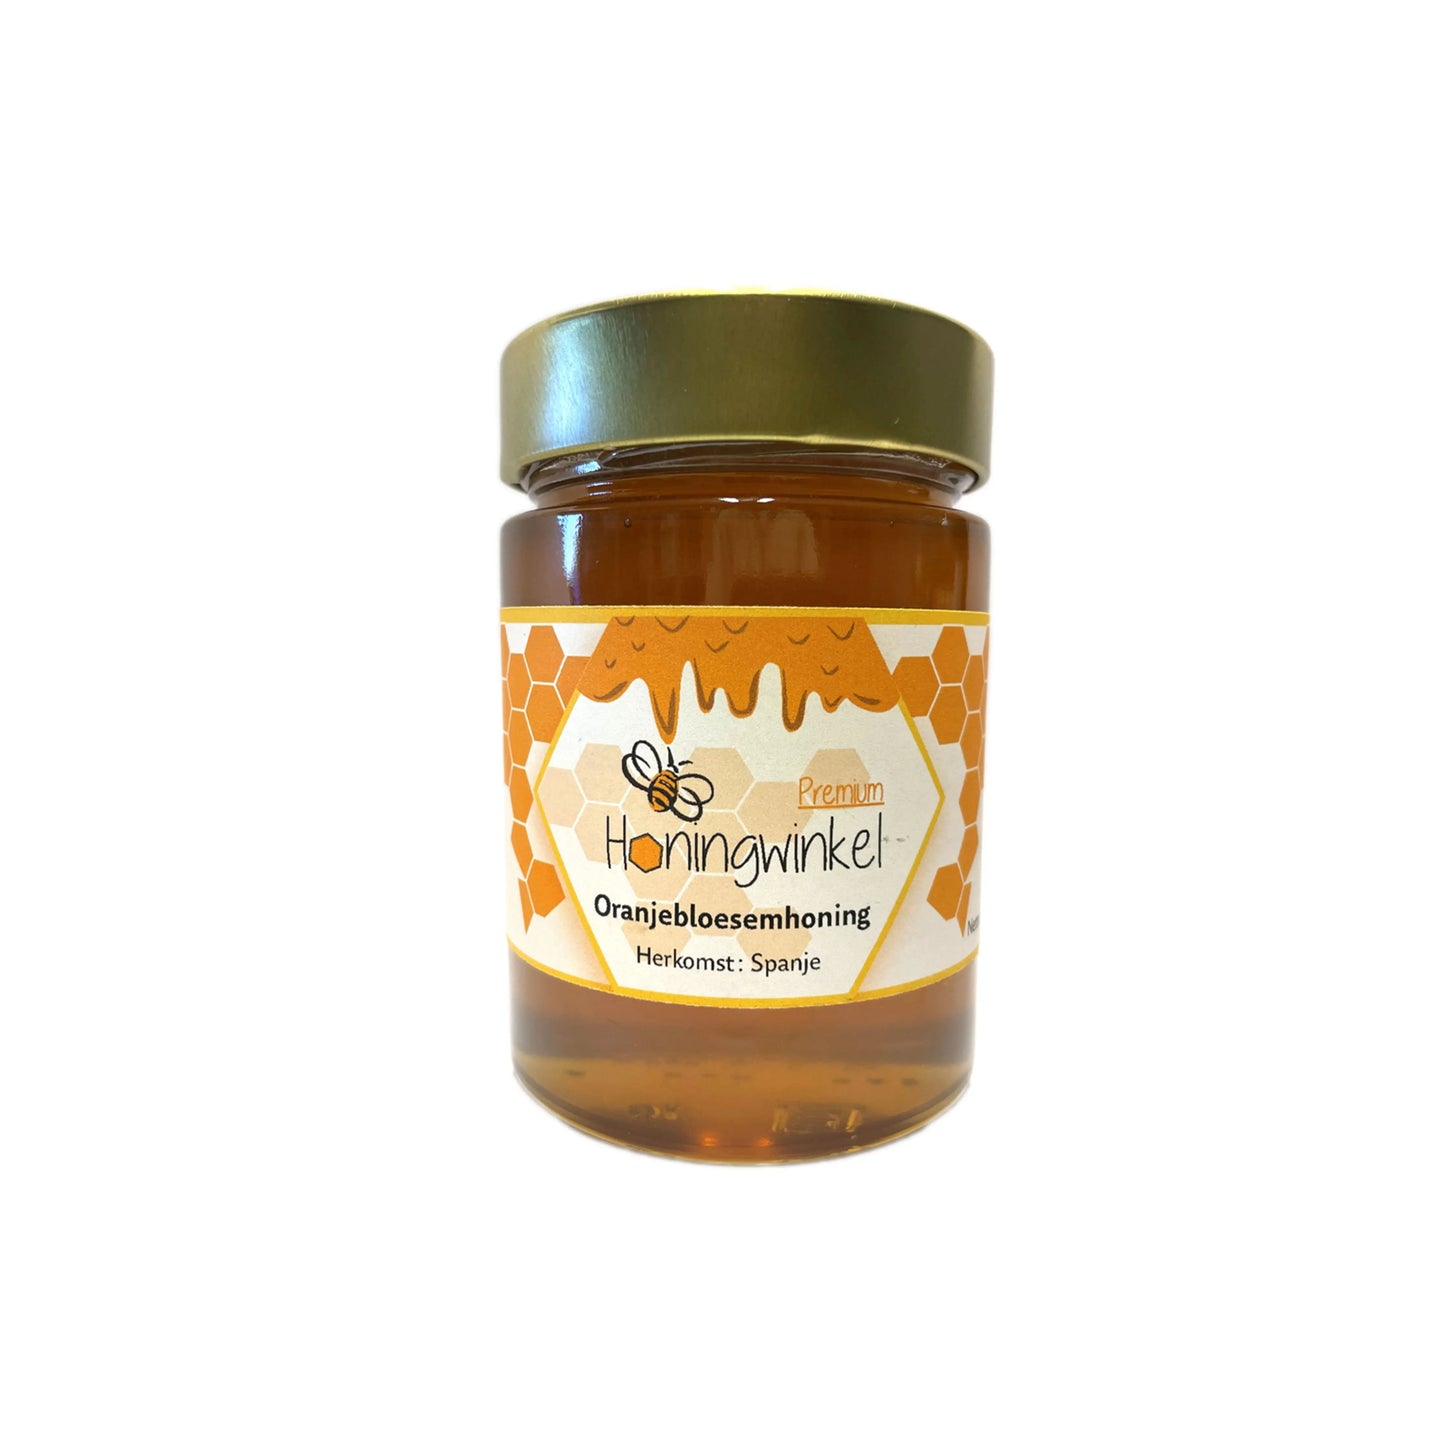 Premium oranjebloesemhoning vloeibaar Spanje 450g Honingwinkel (vloeibaar) - Honingwinkel